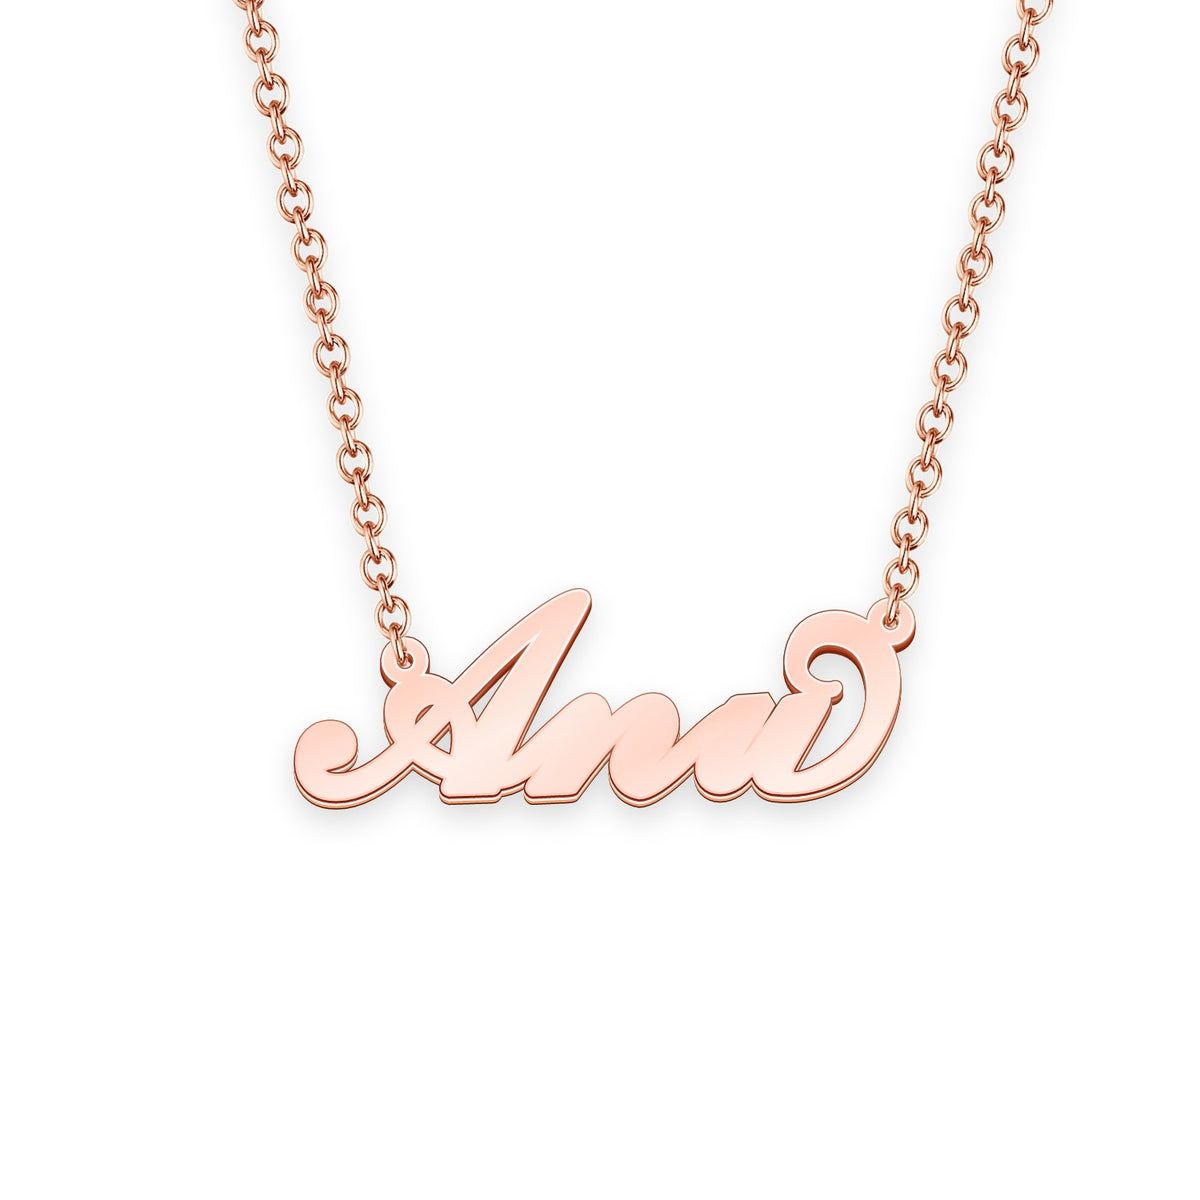 Pin by Anu on Diamond pendant  Jewelry design necklace, Gold